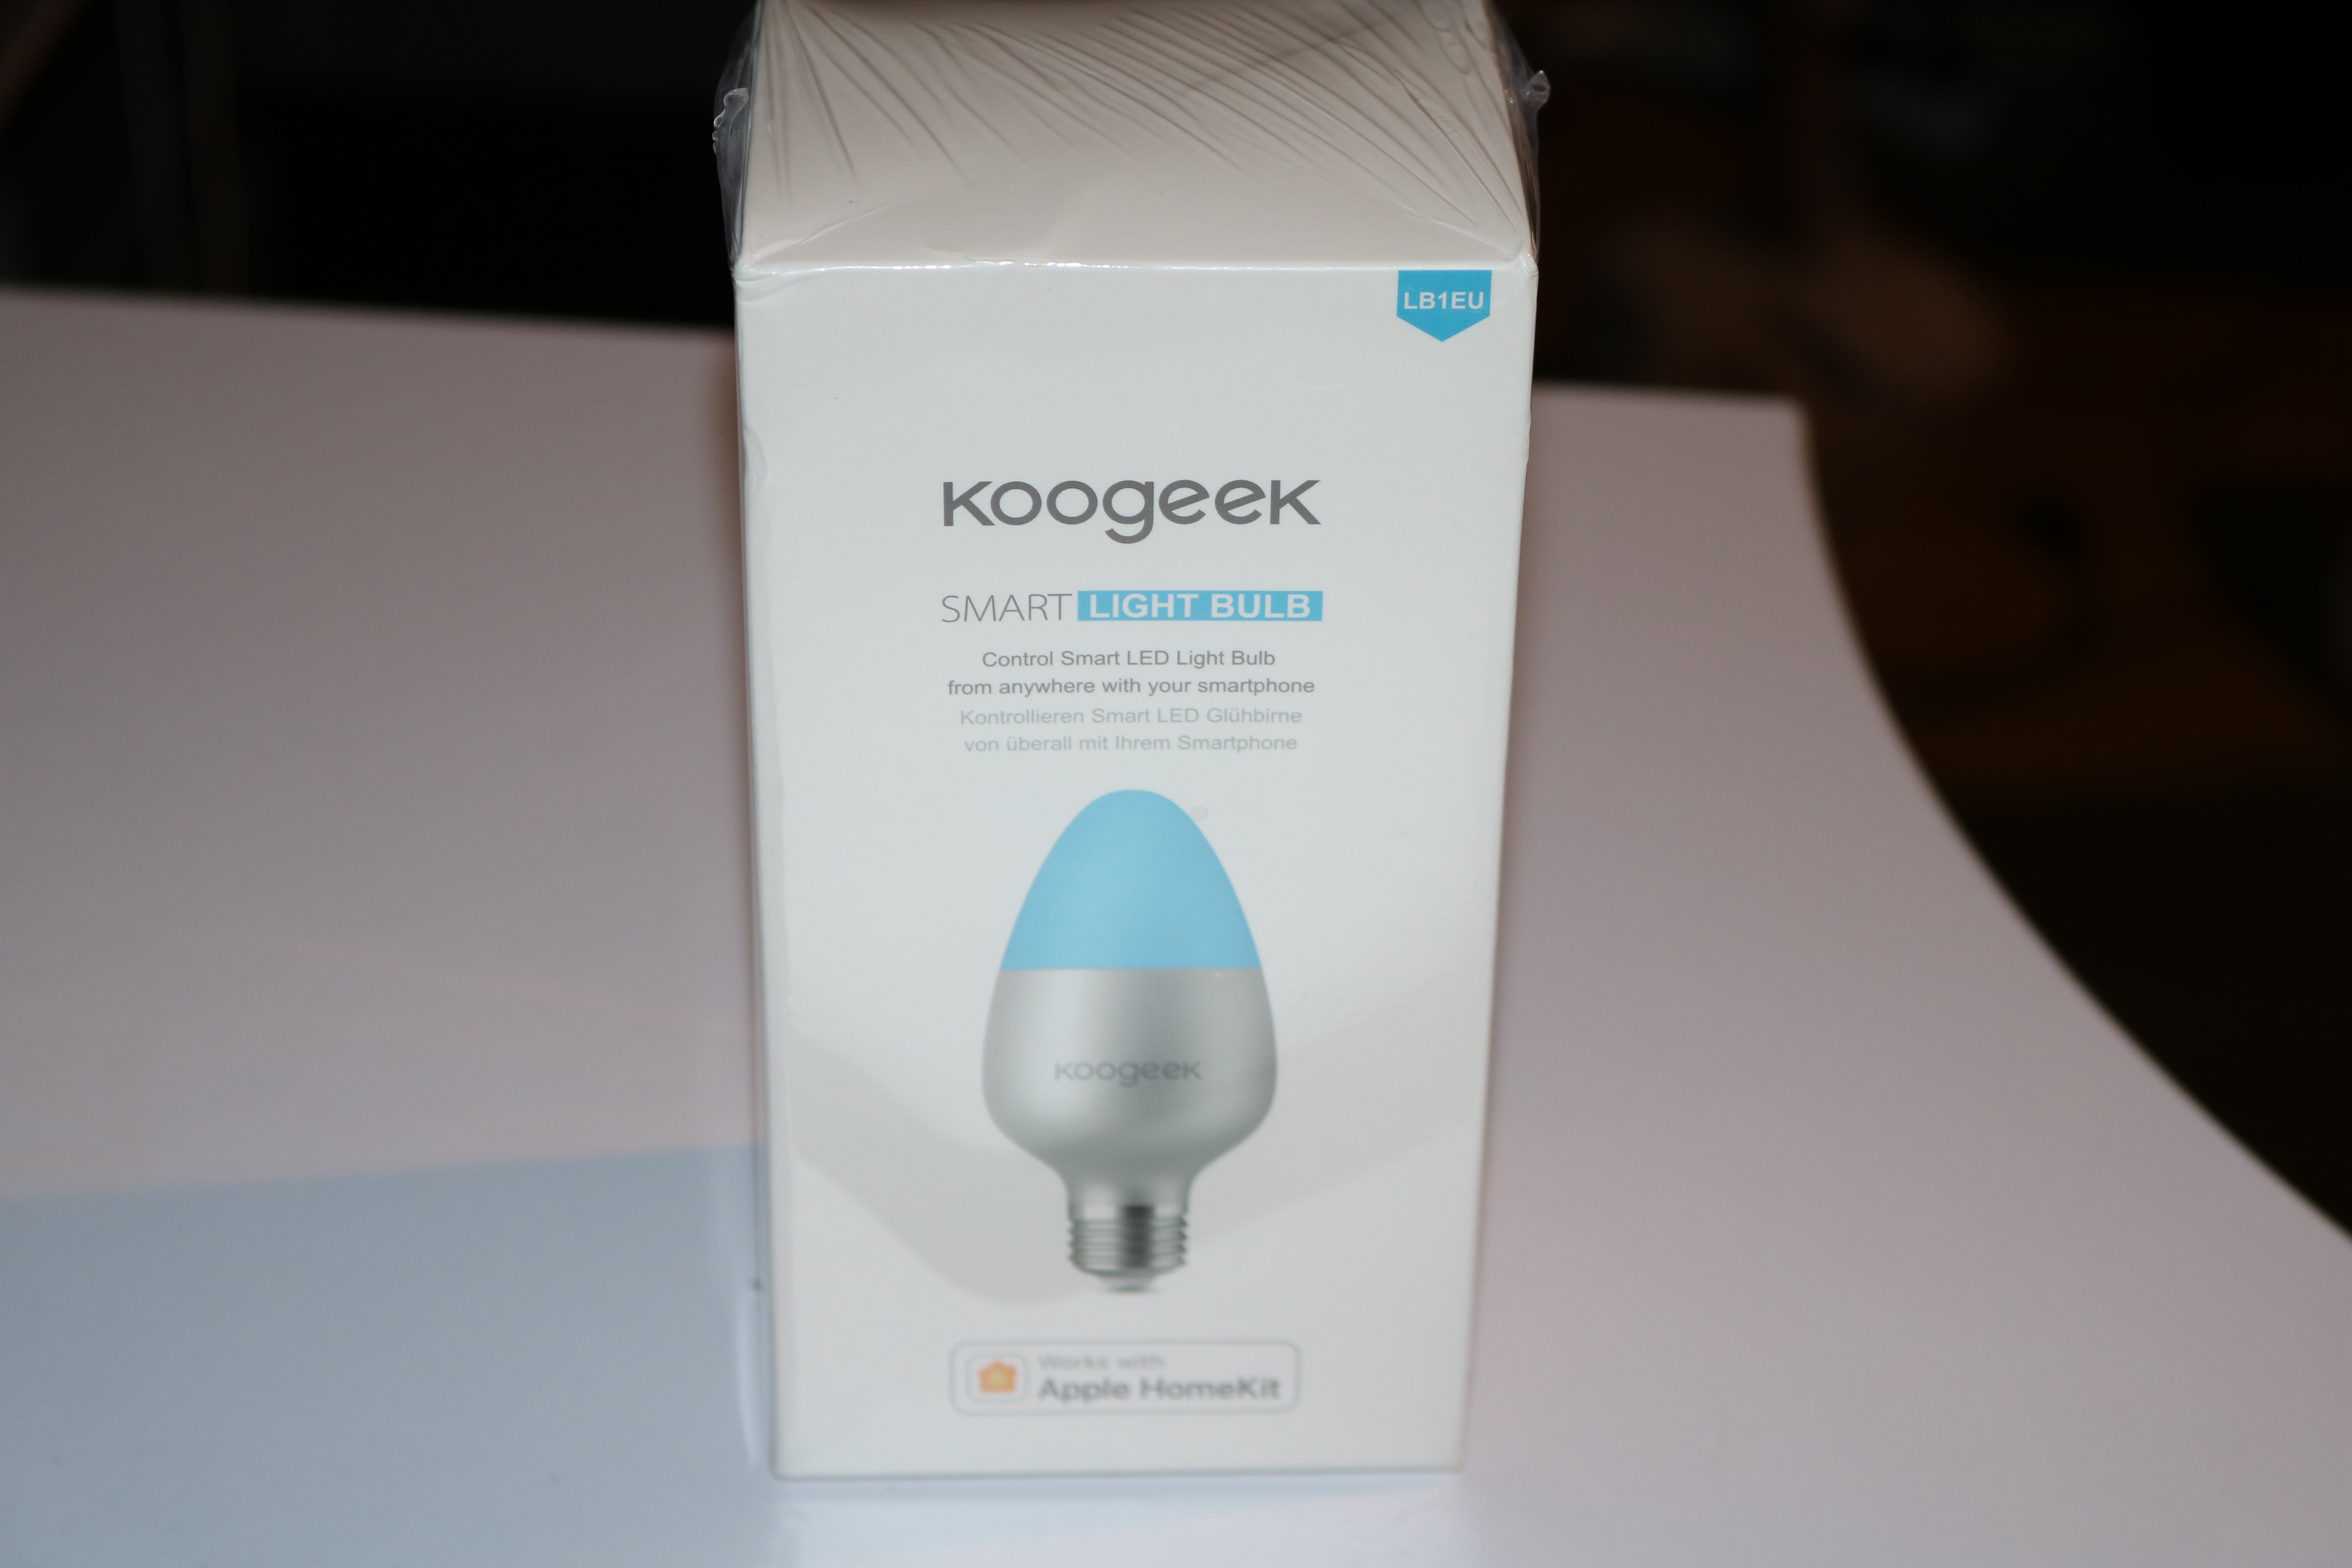 Koogeek Smart Light Bulb LB1EU